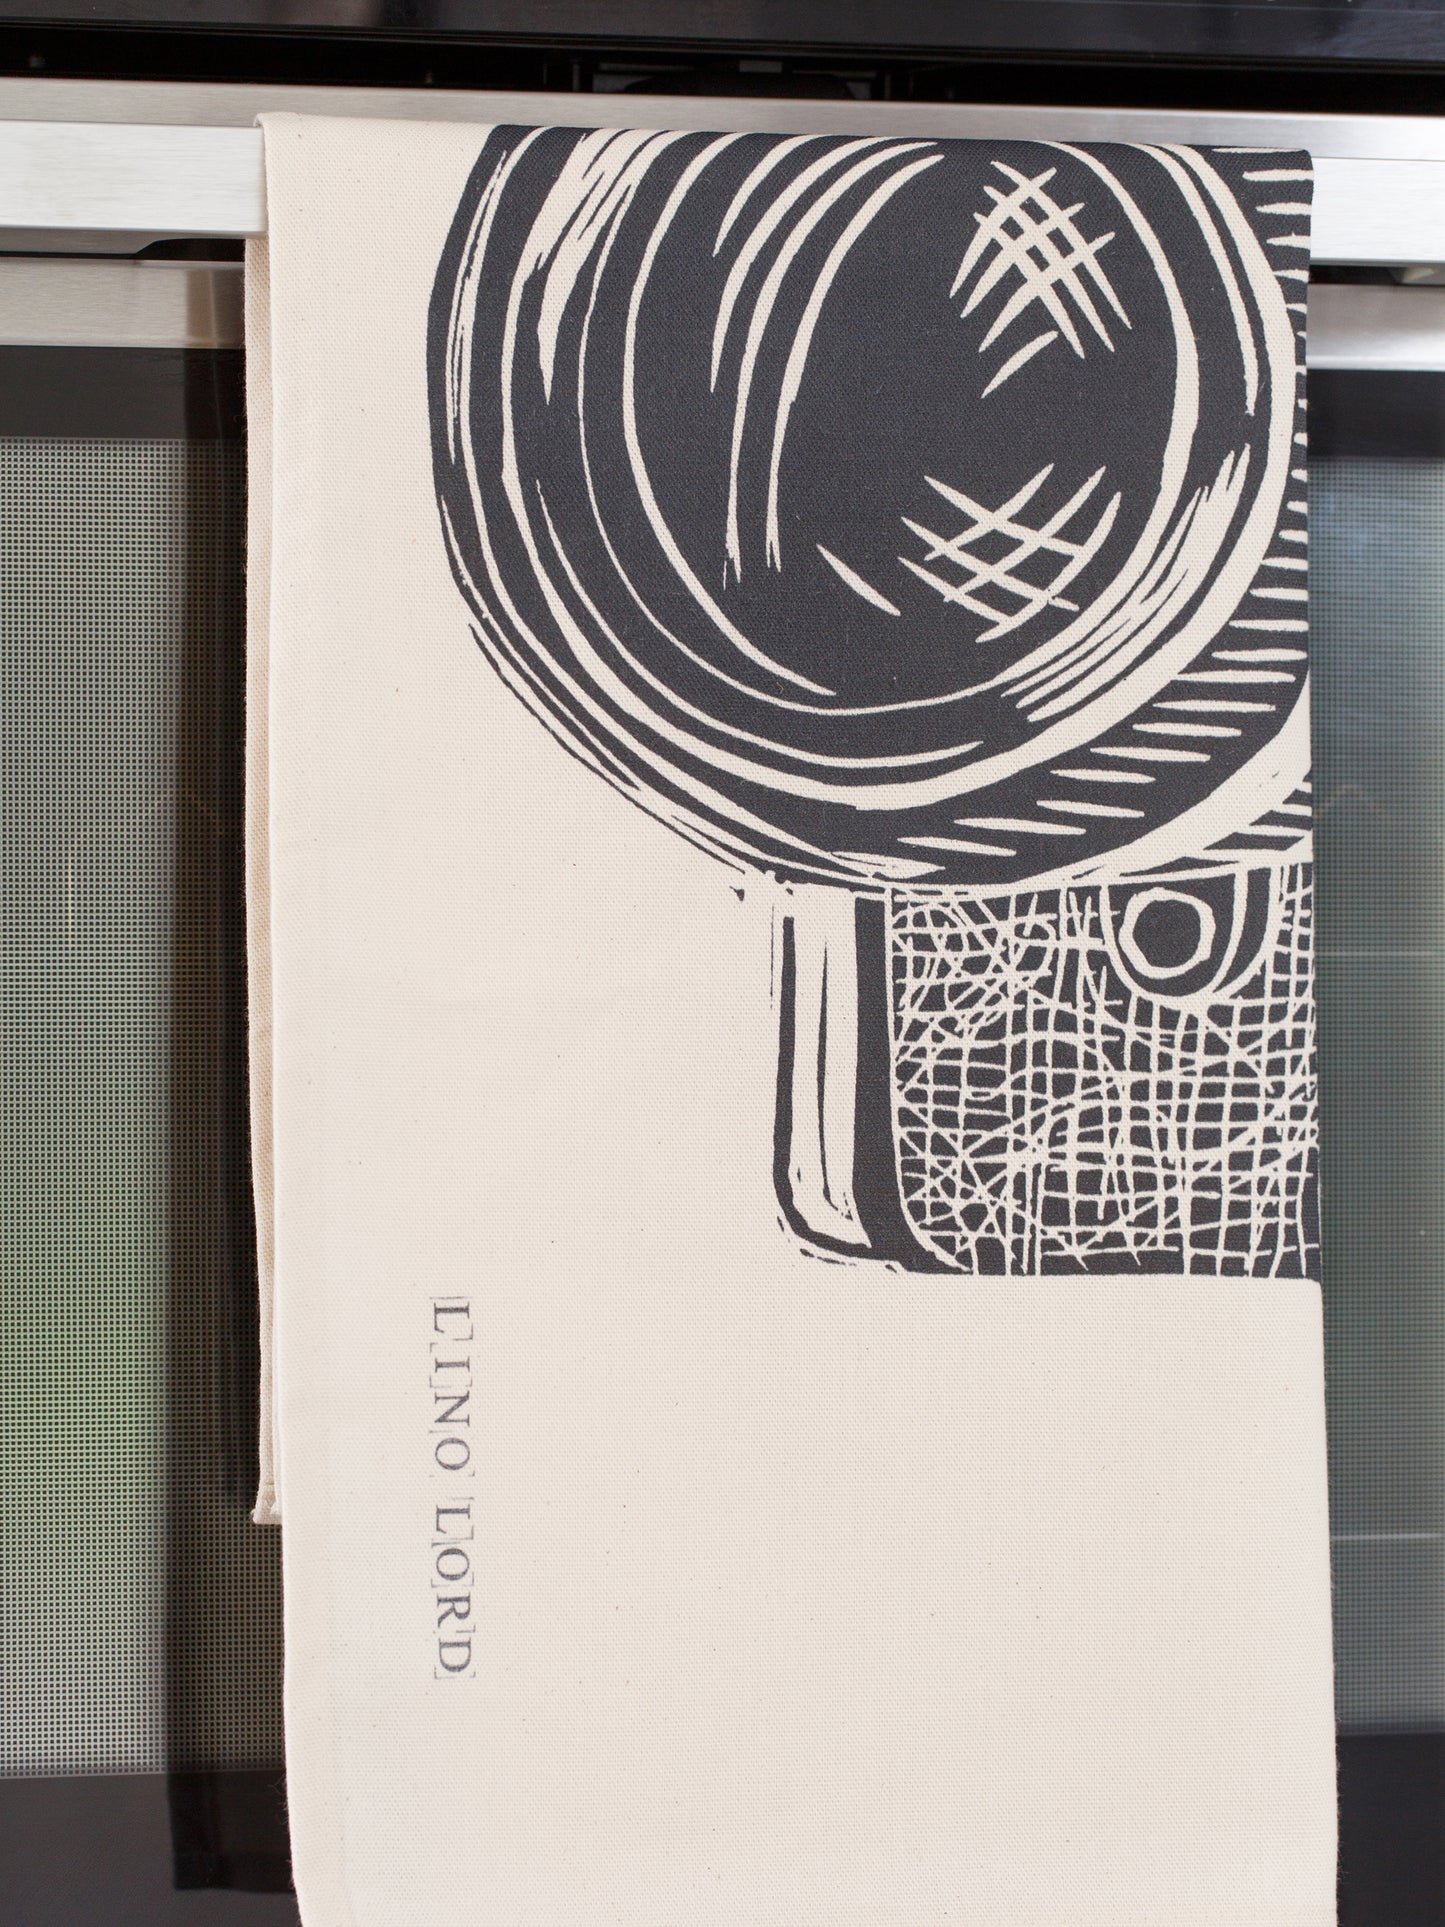 Cotton Tea Towel with Camera Lino Print